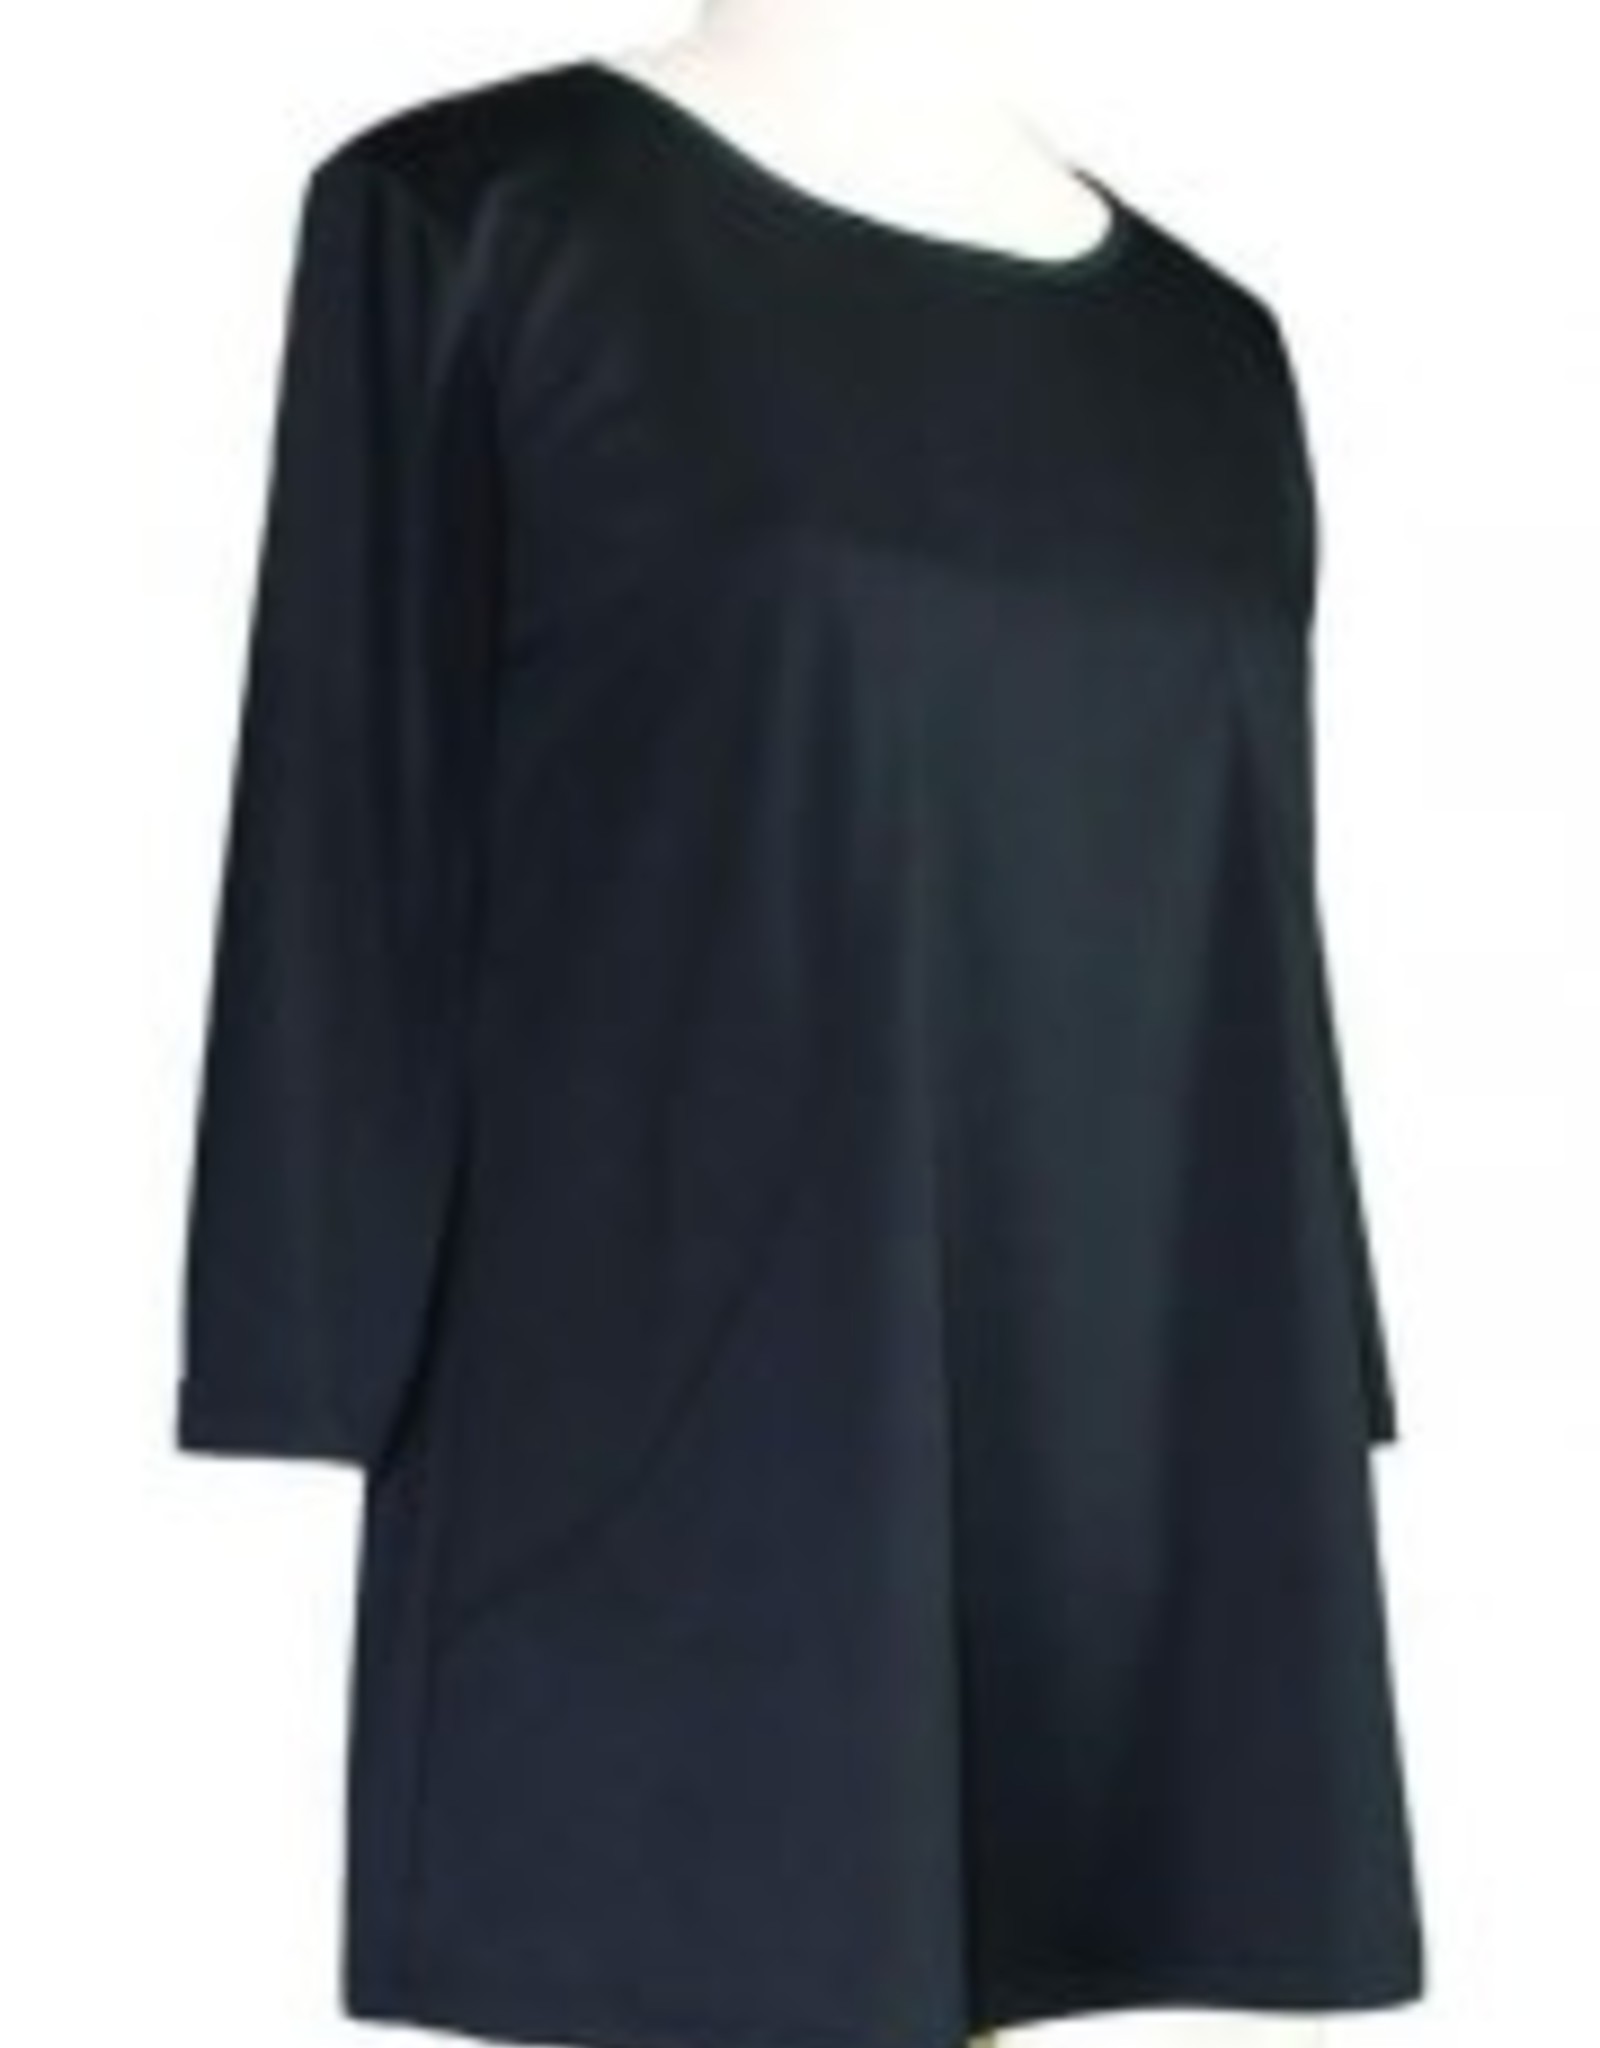 - Black 3/4 Sleeve Top w/Seam Detail & Pockets